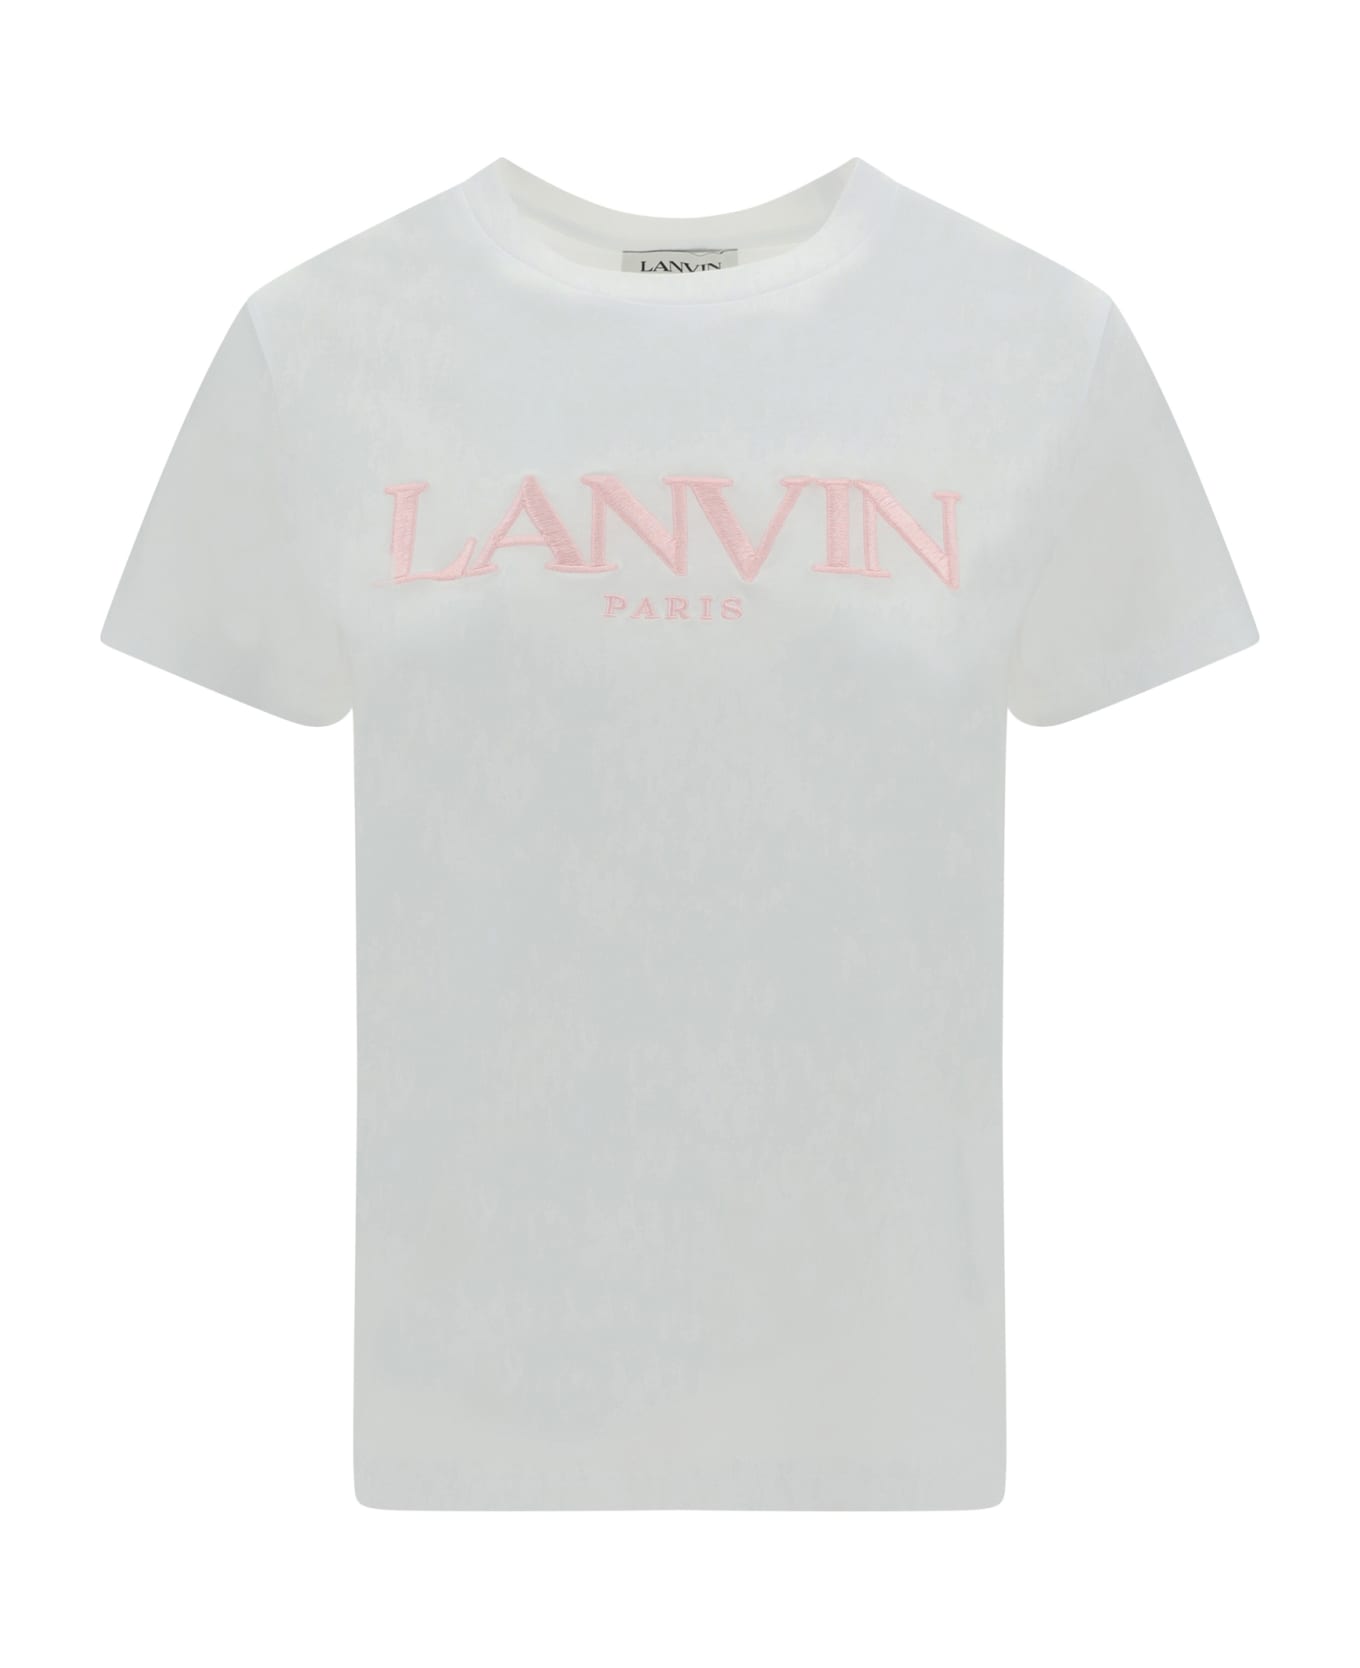 Lanvin T-shirt - Bianco